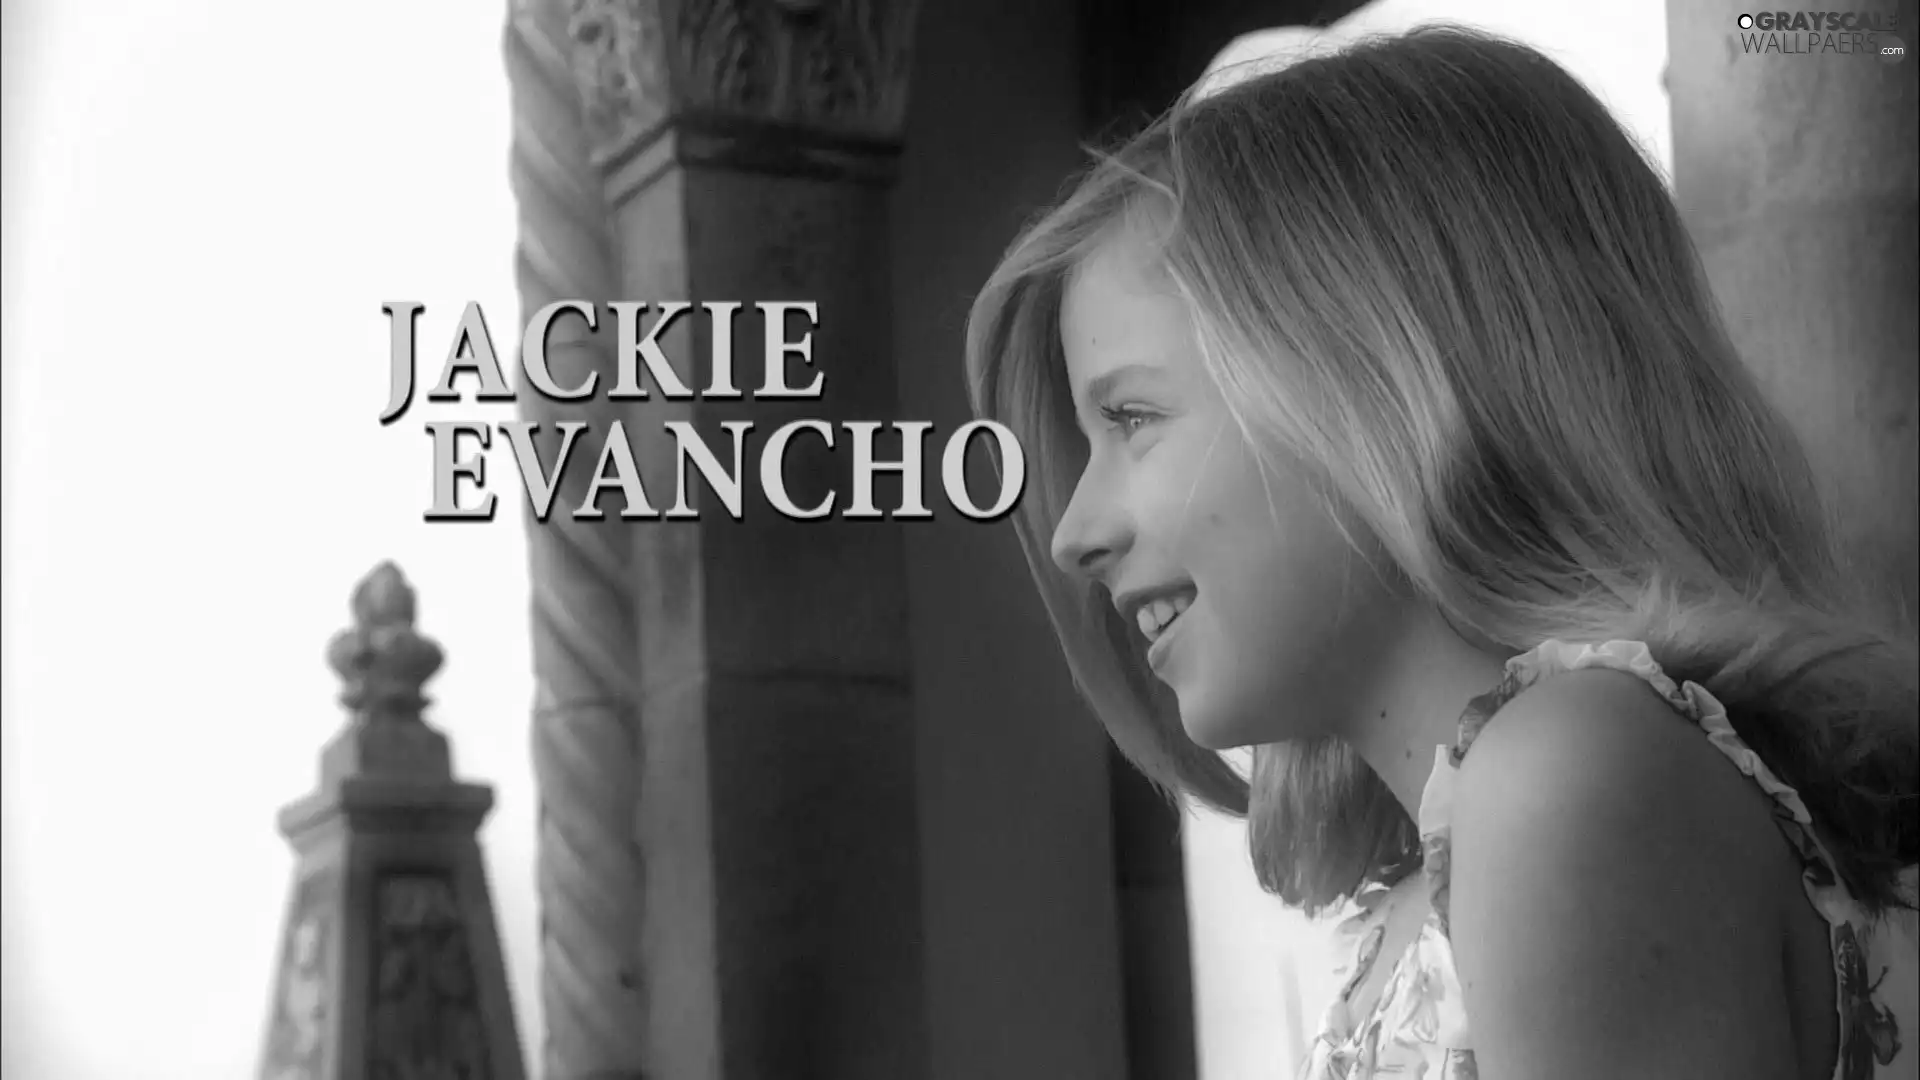 Jackie Evancho, singer